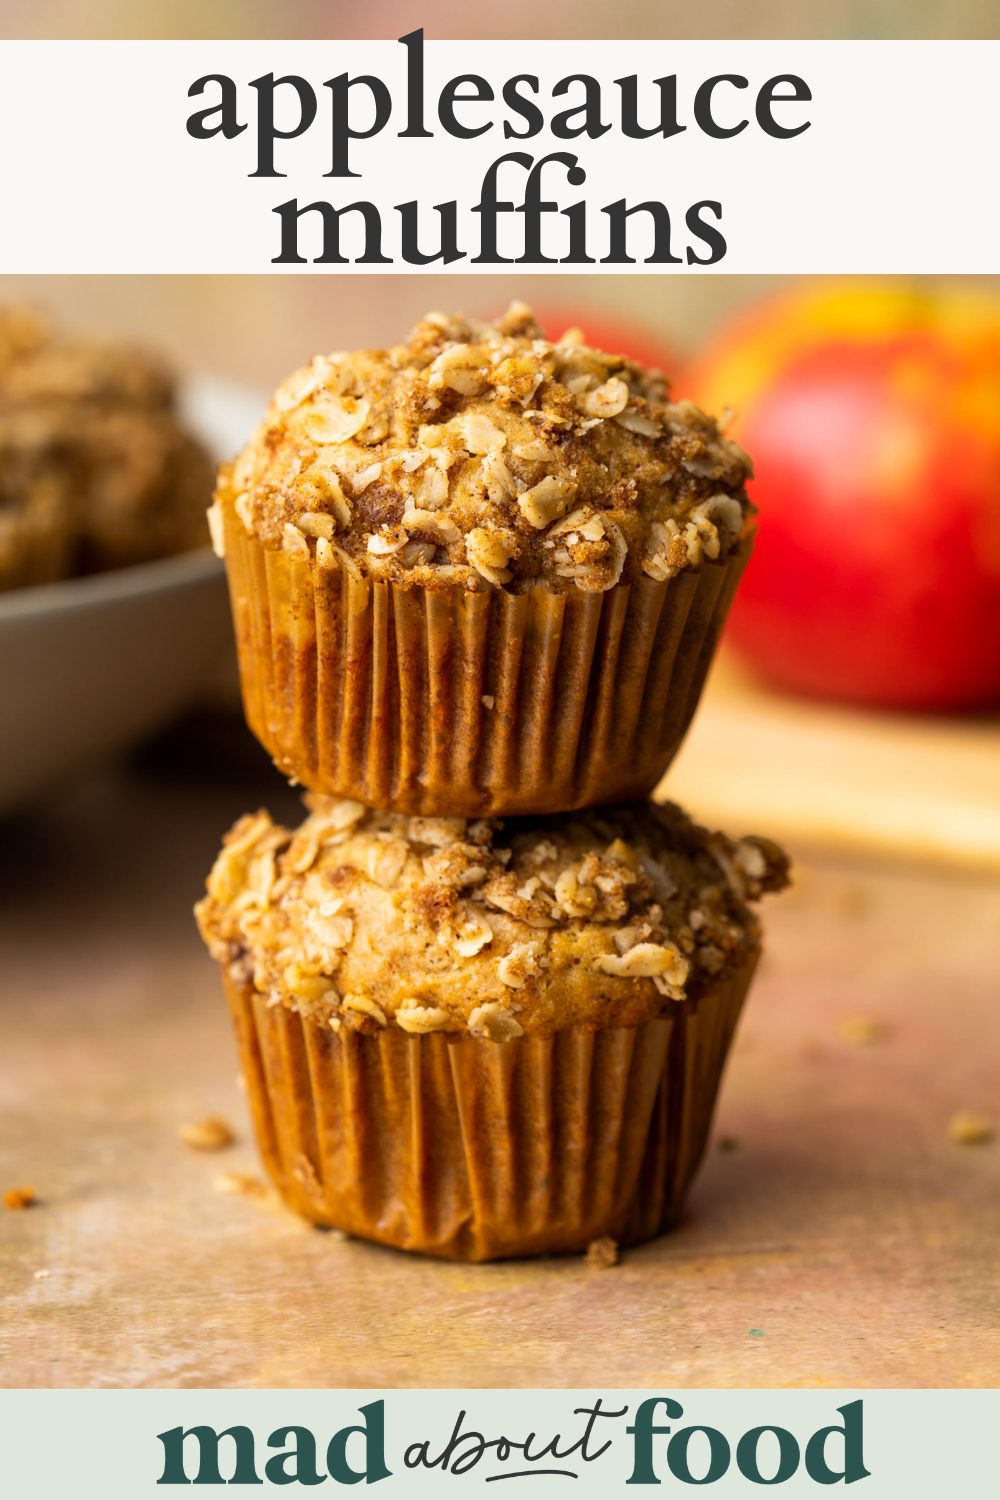 Image for pinning applesauce muffins recipe on Pinterest